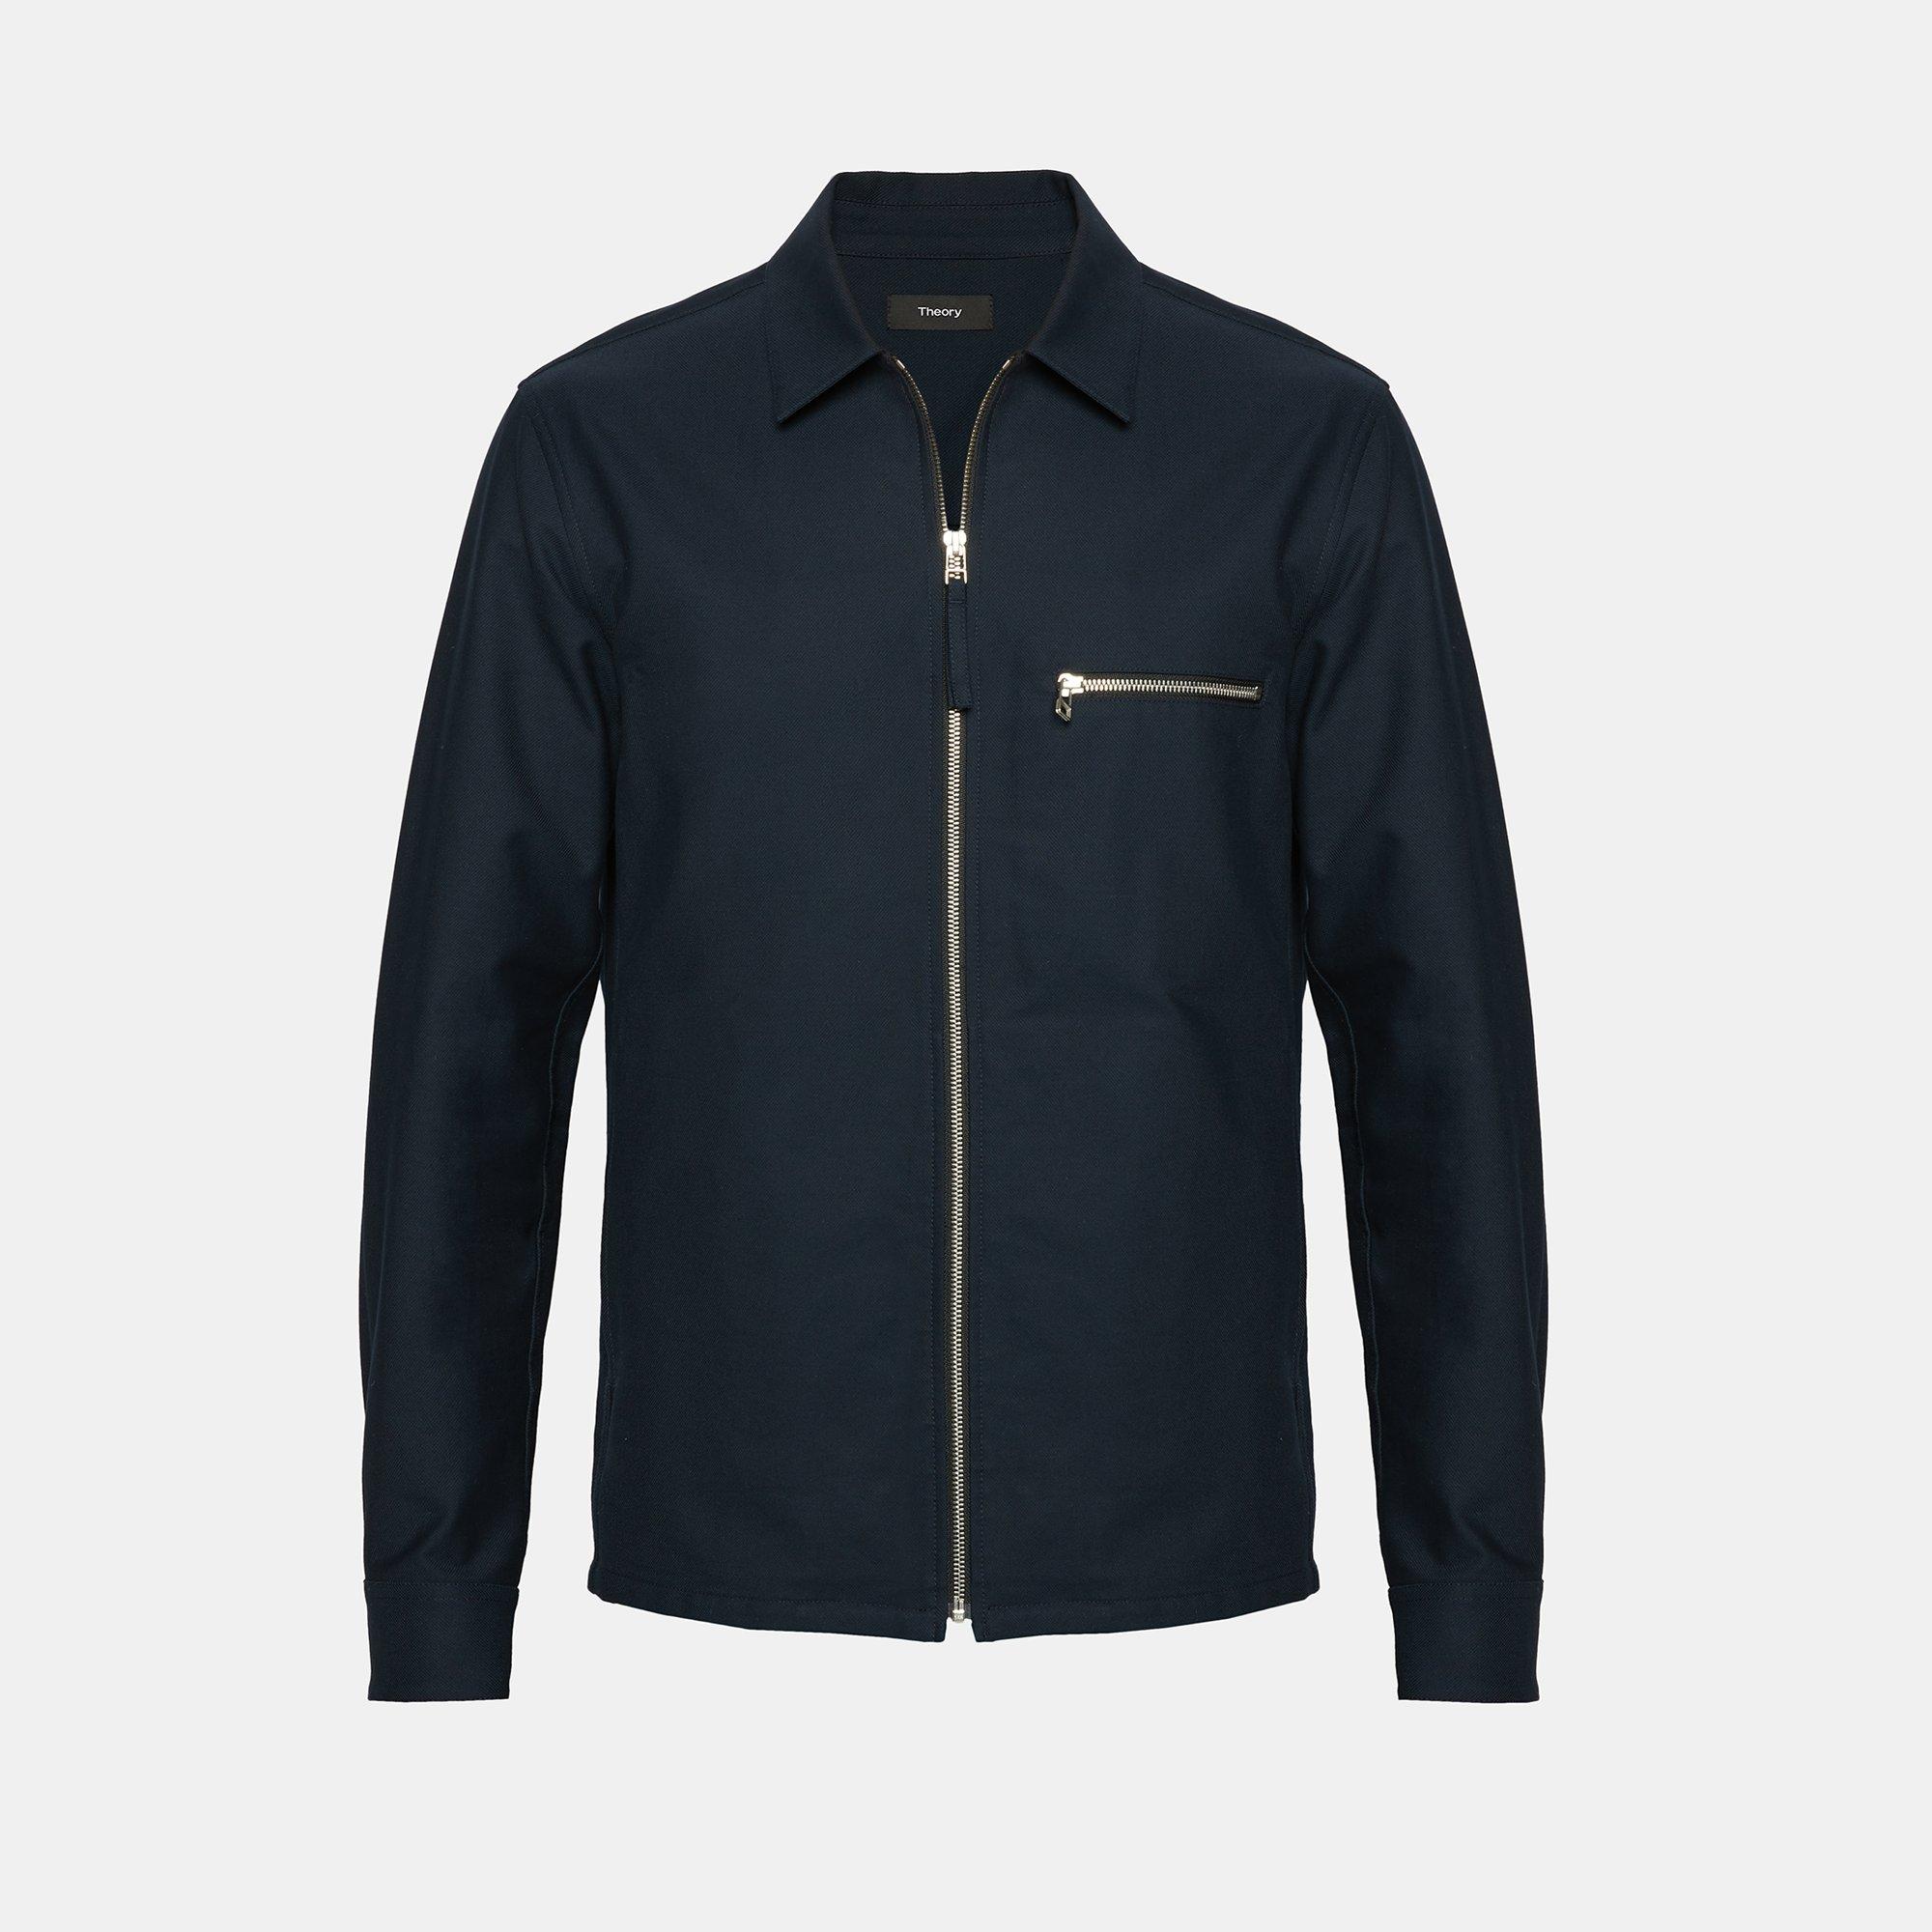 Cotton Pique Zip Shirt Jacket | Theory